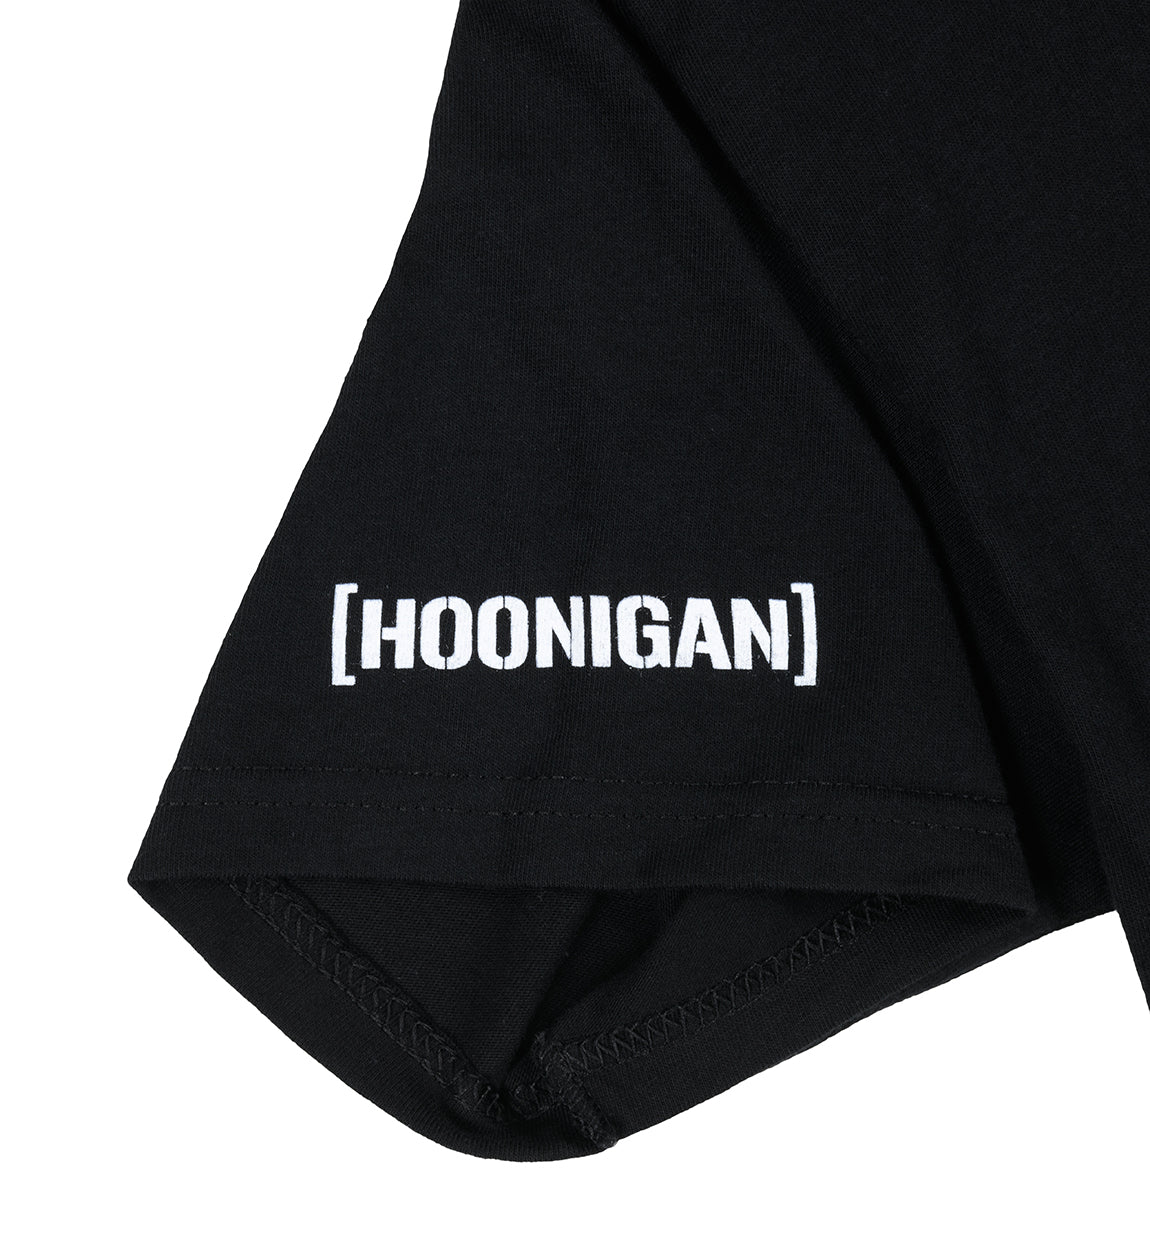 HOONIGAN GYMKHANA 2022 LIVERY short sleeve T-shirt